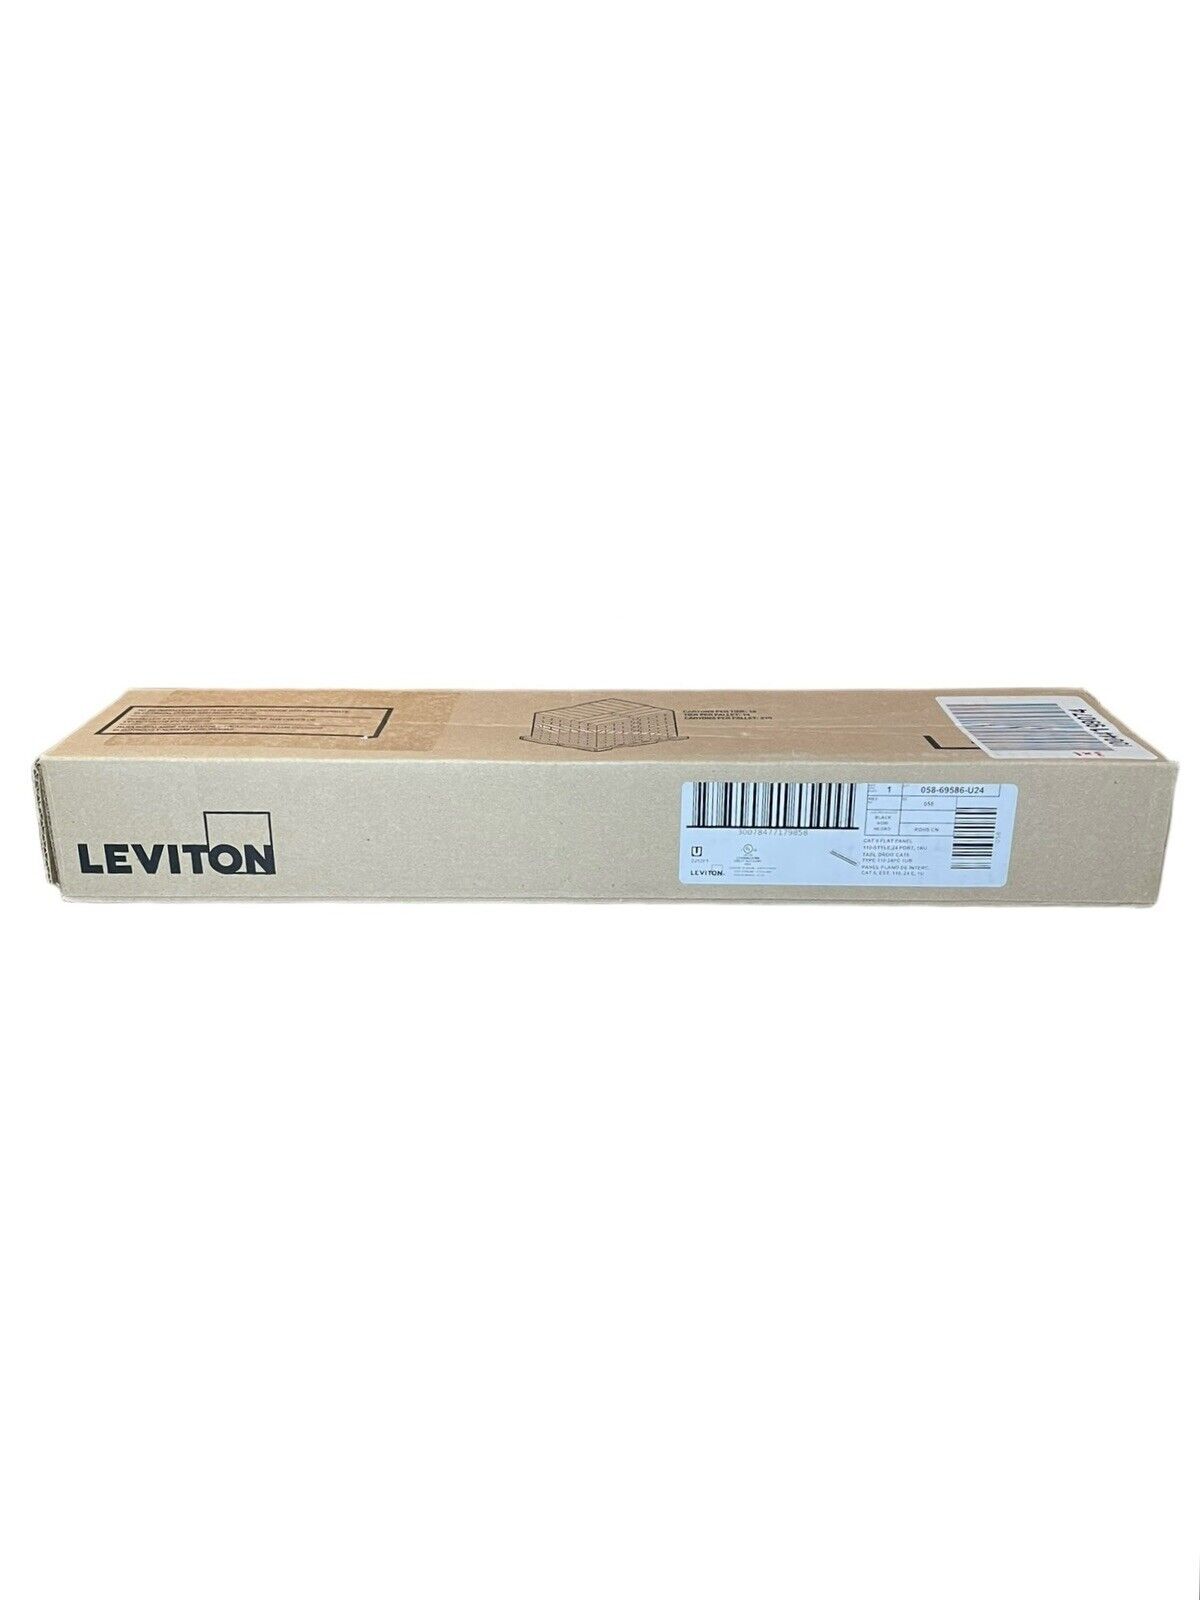 Leviton 058-69586-U24 CAT6 Flat Panel 110- Style 24-Port 1RU. New in Sealed Box